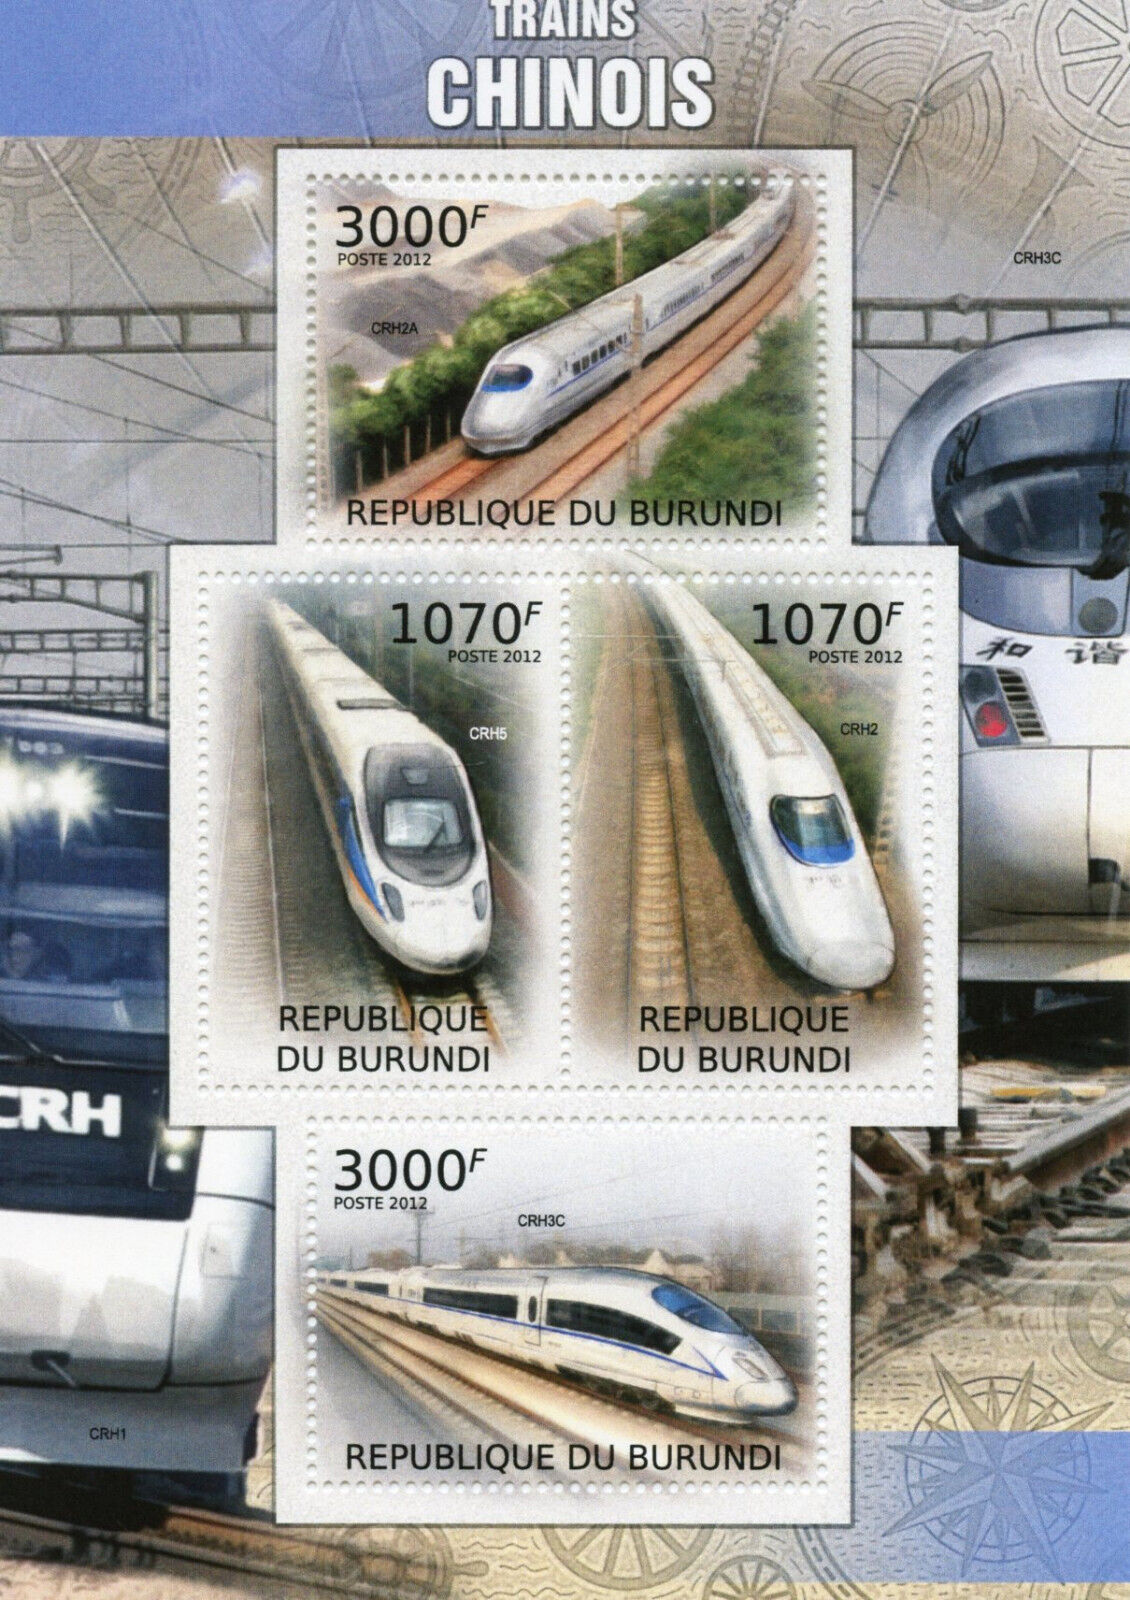 Burundi 2012 MNH Rail Stamps Chinese Trains CRH2A CRH5 CRH2 Railways 4v M/S